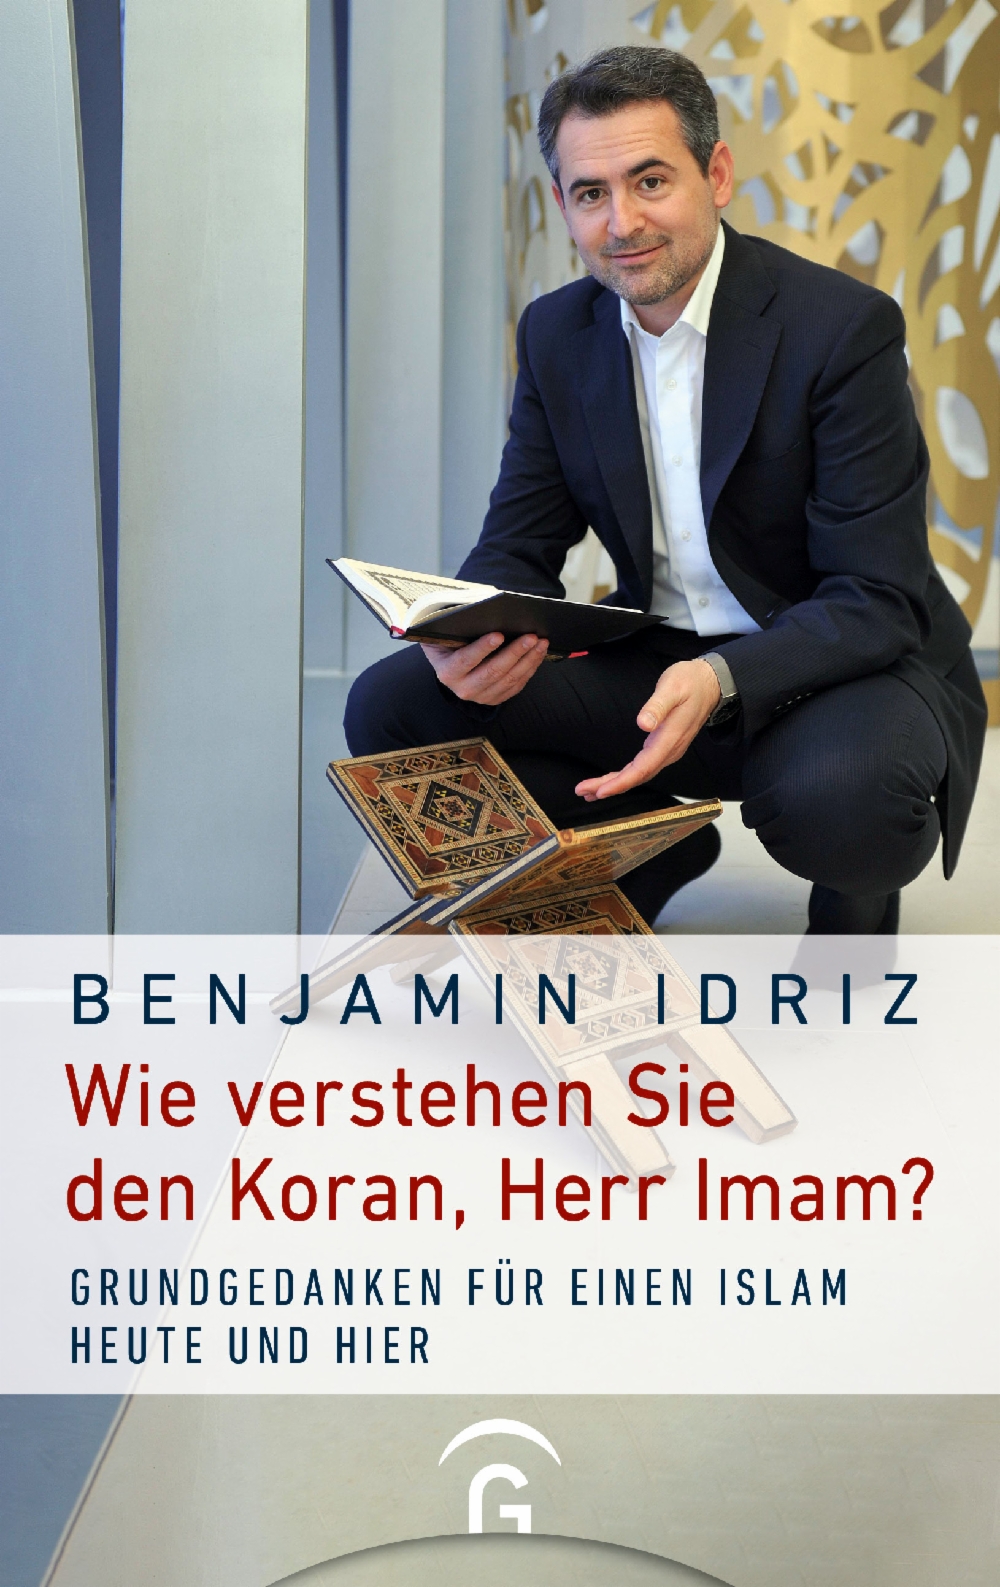 Cover of Benjamin Idriz' "Wie verstehen Sie den Koran, Herr Imam?", published in German by the Guetersloher Verlagshaus